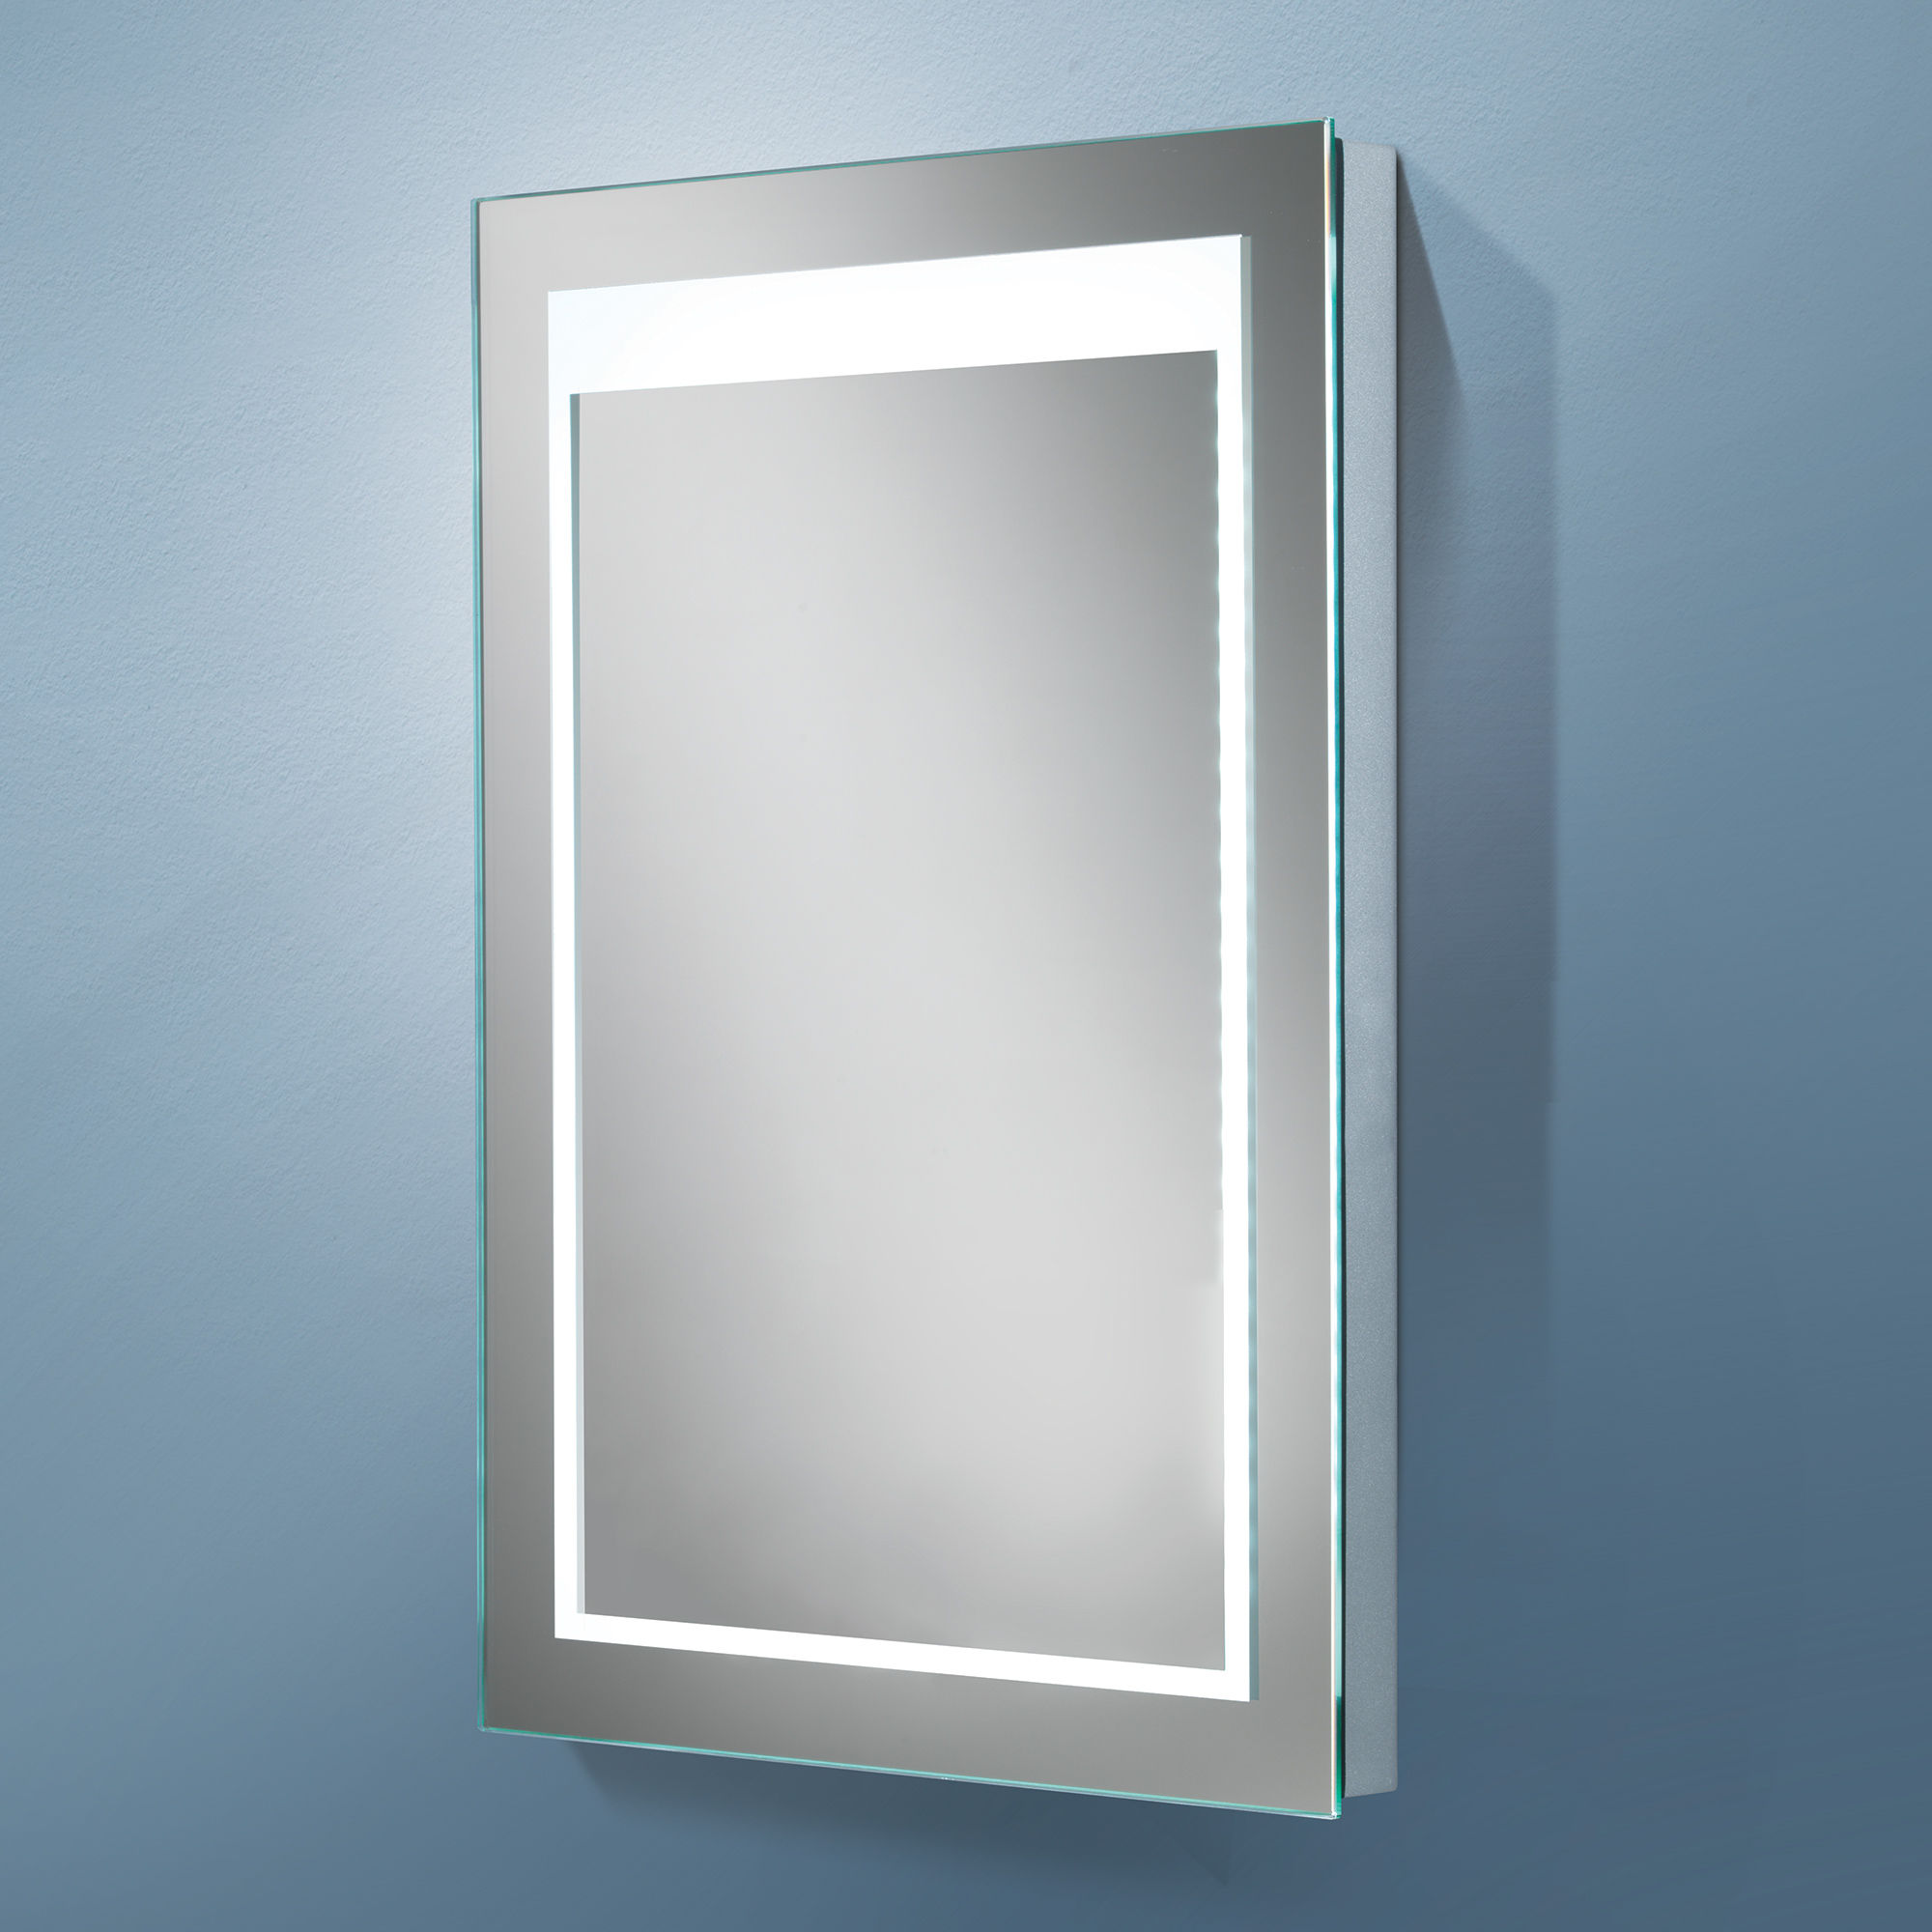 HIB Liberty LED Bathroom Mirror